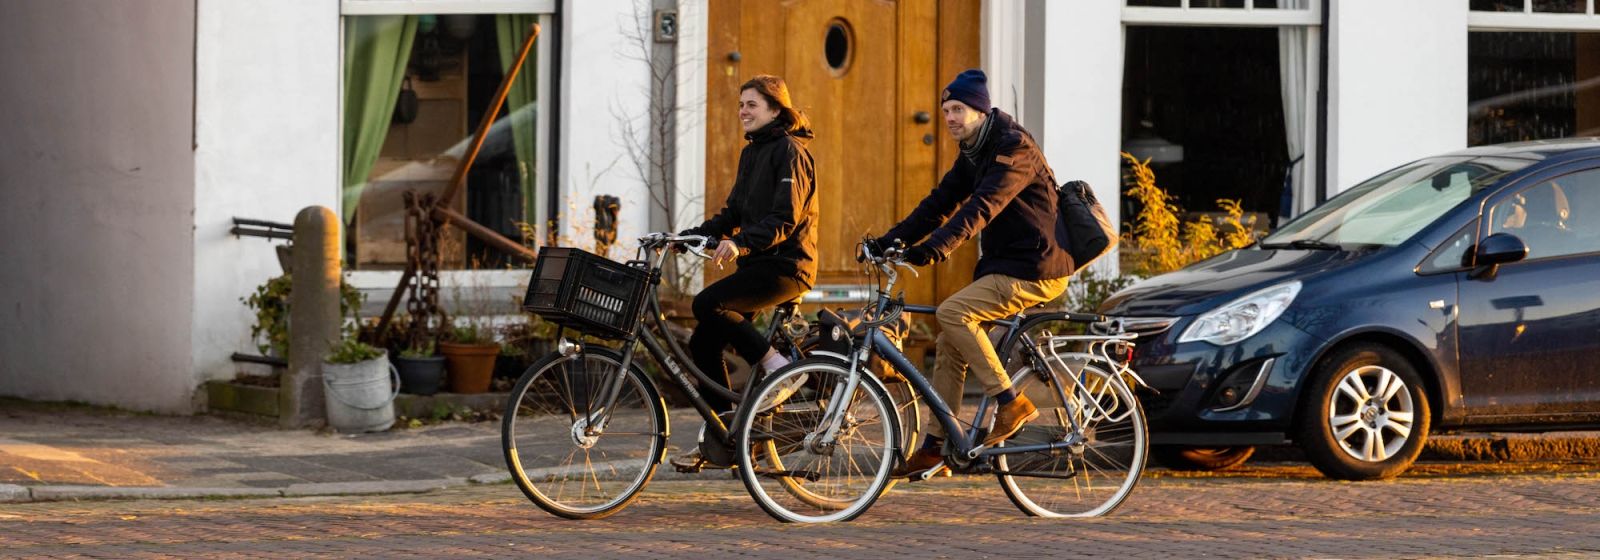 Handy shared bike system at bus station Wageningen